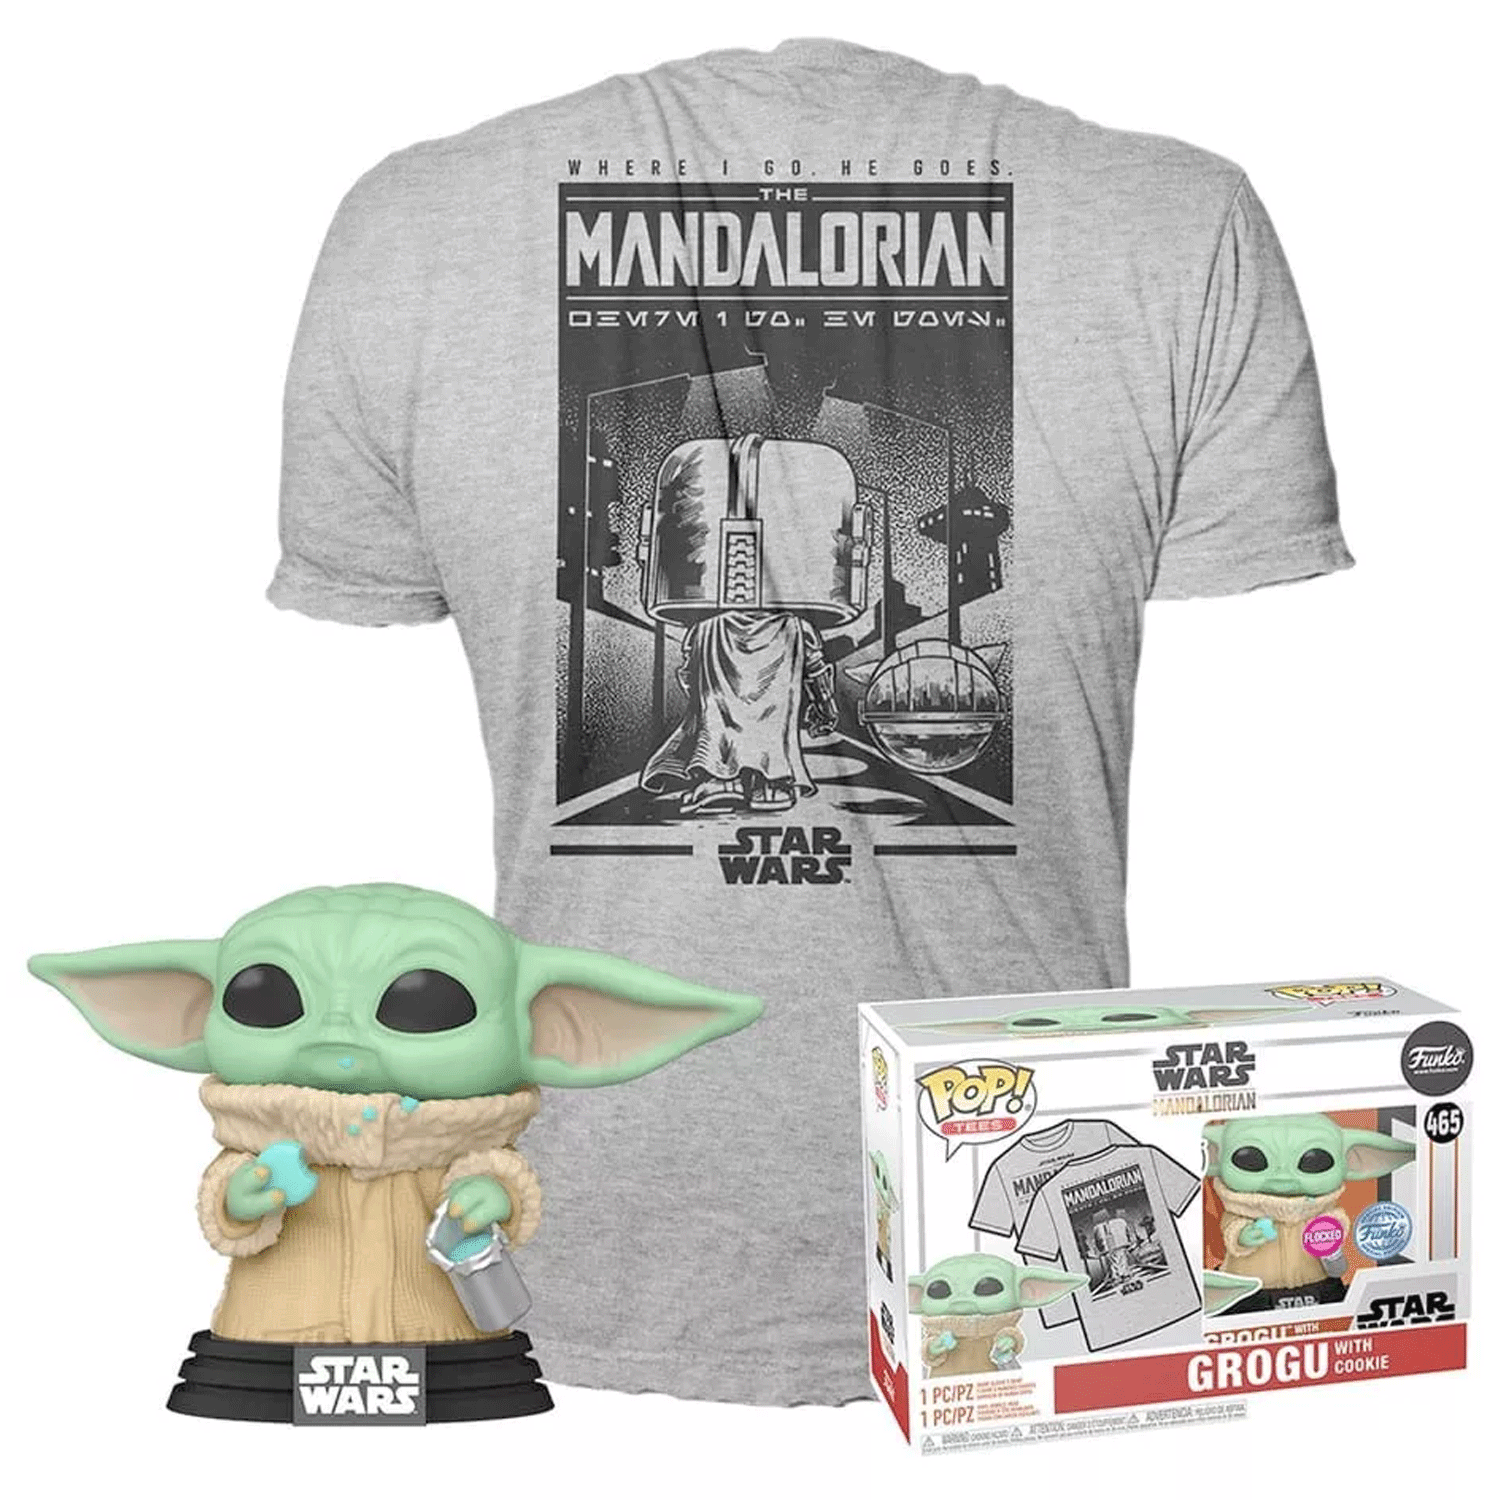 Star Wars The Mandalorian Grogu with Cookie Pop! Vinyl and Tee Set